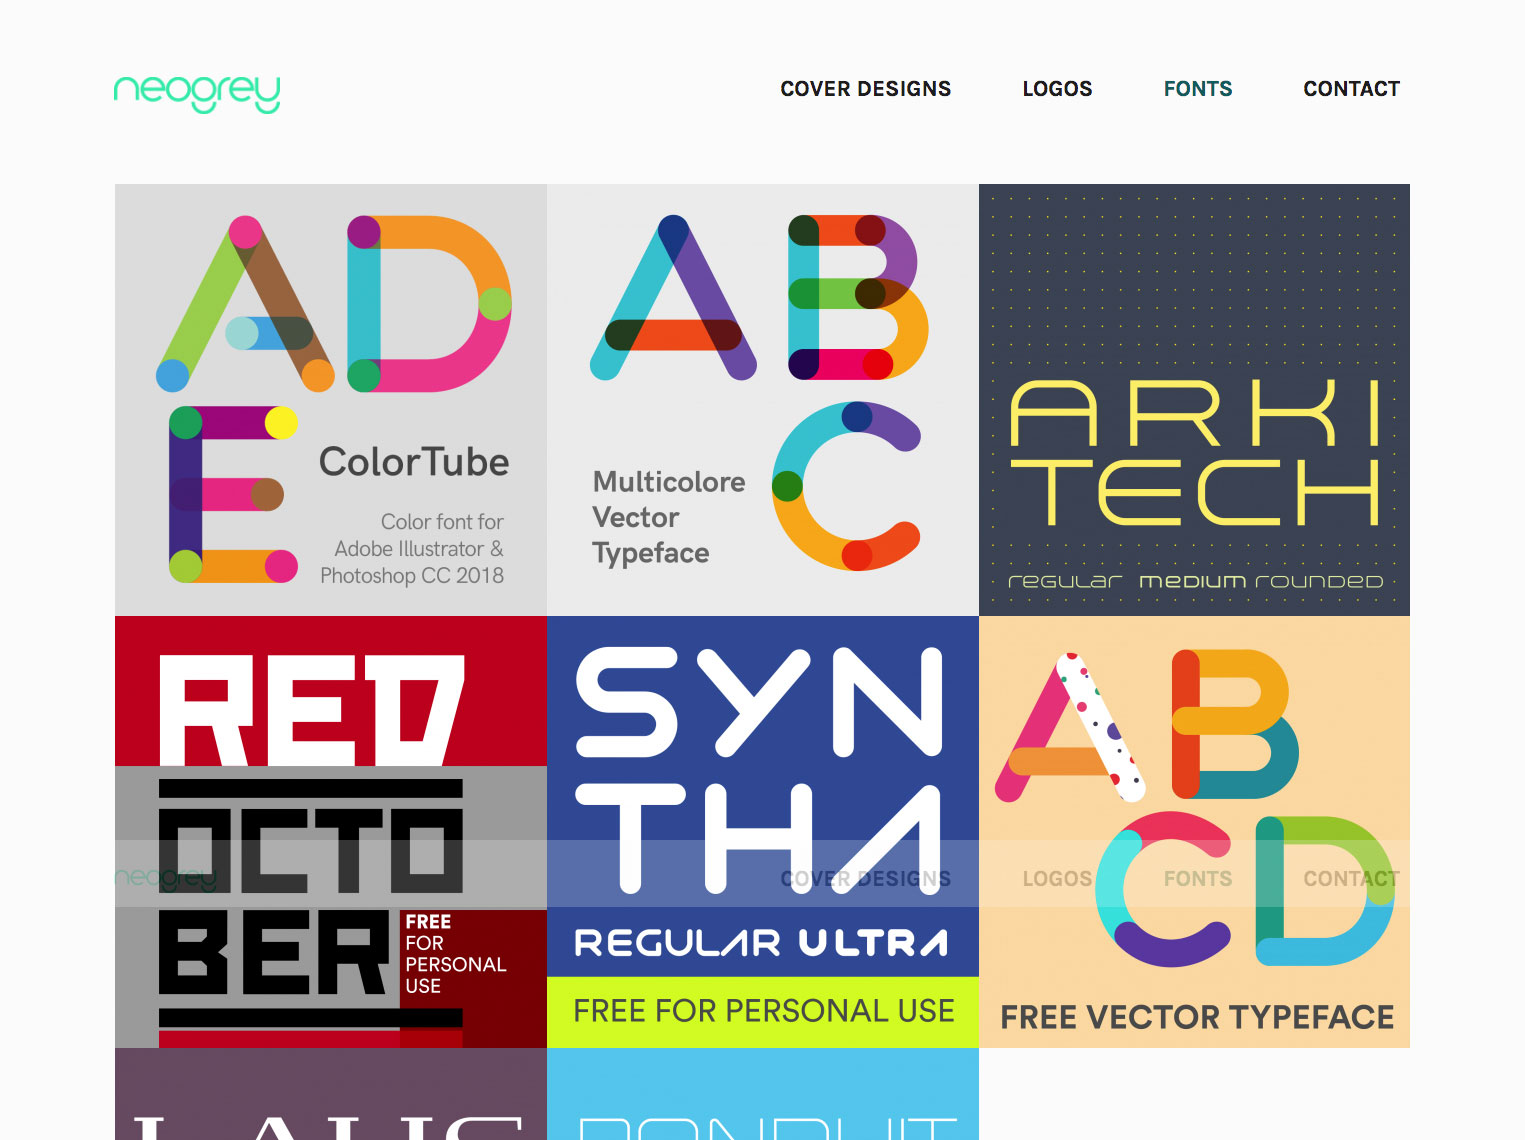 download free fonts: Neogrey